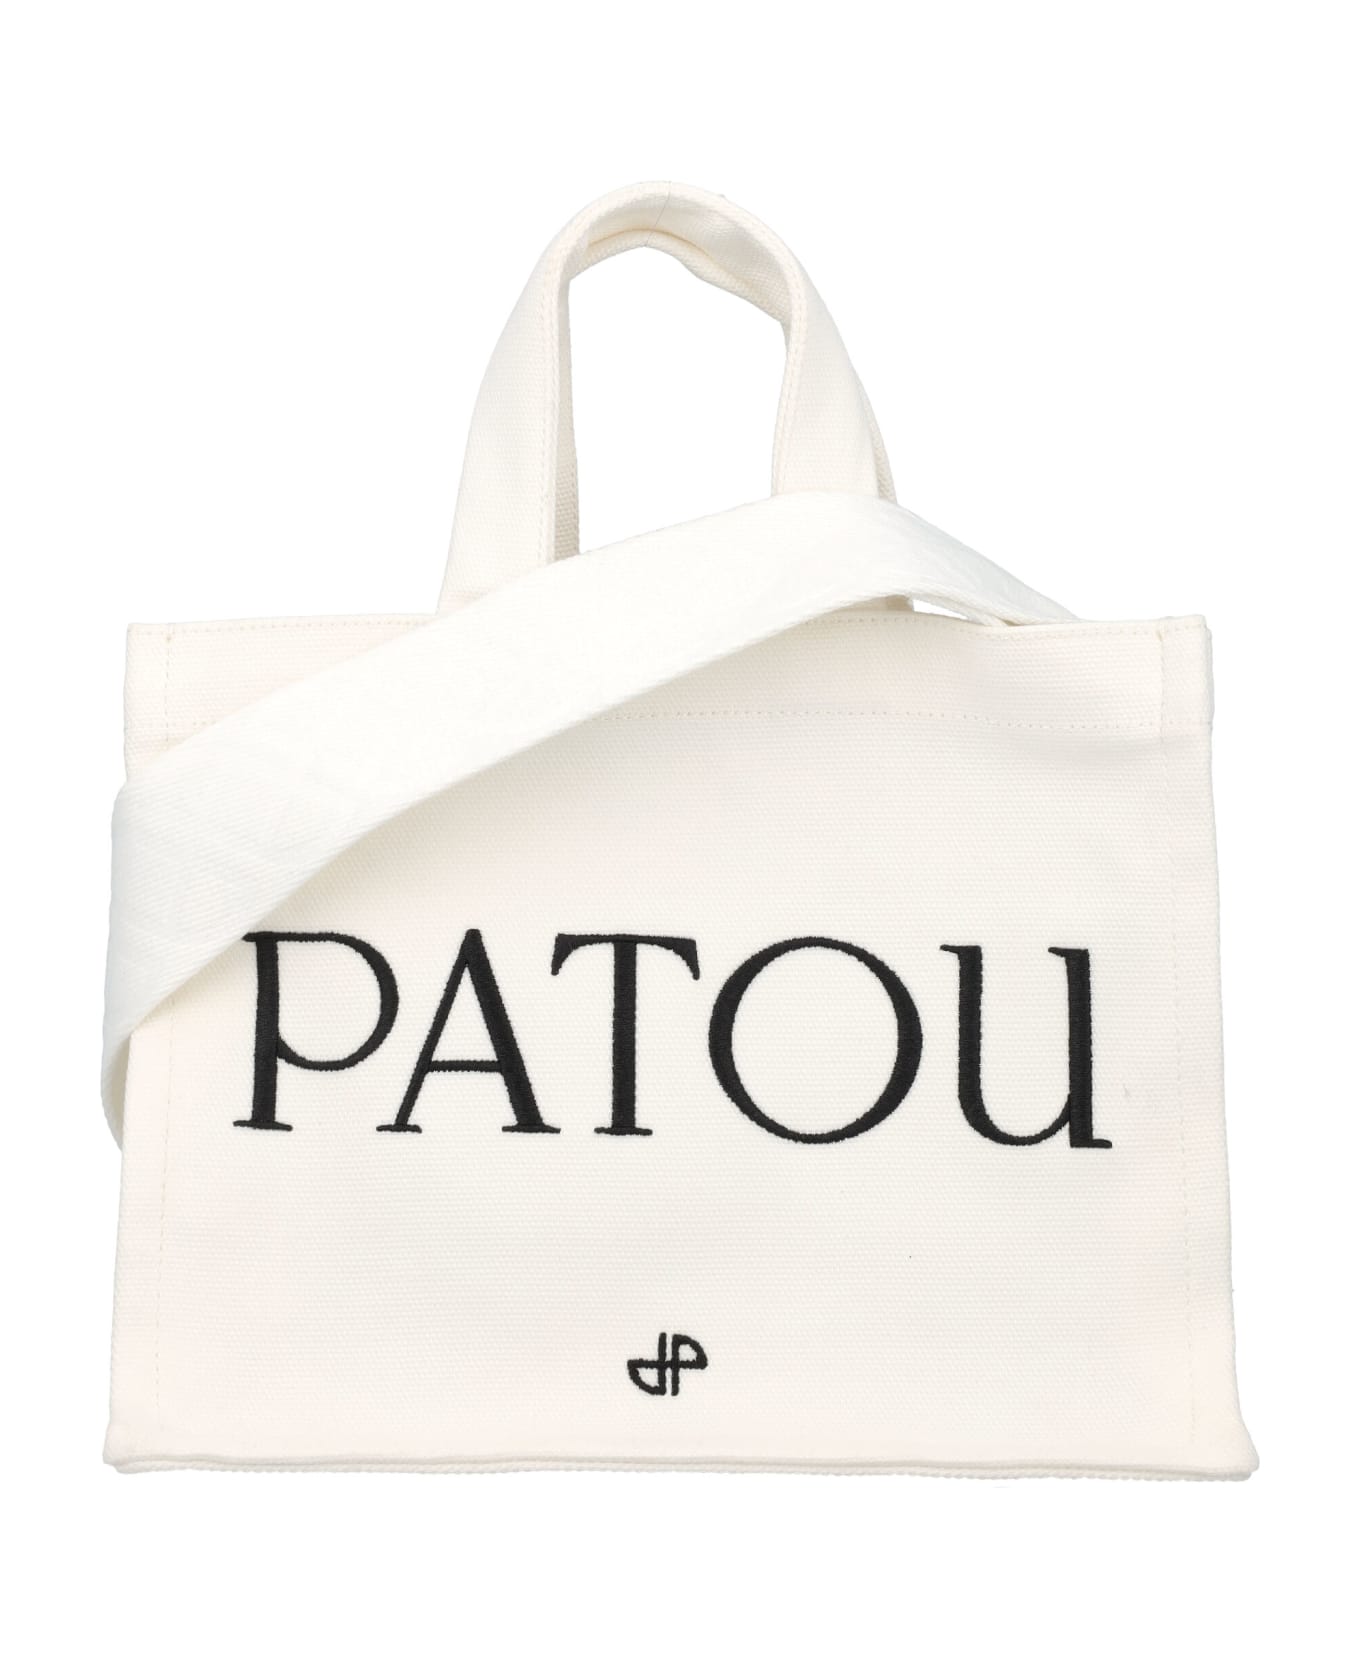 Patou Small Canvas Tote Bag - White トートバッグ